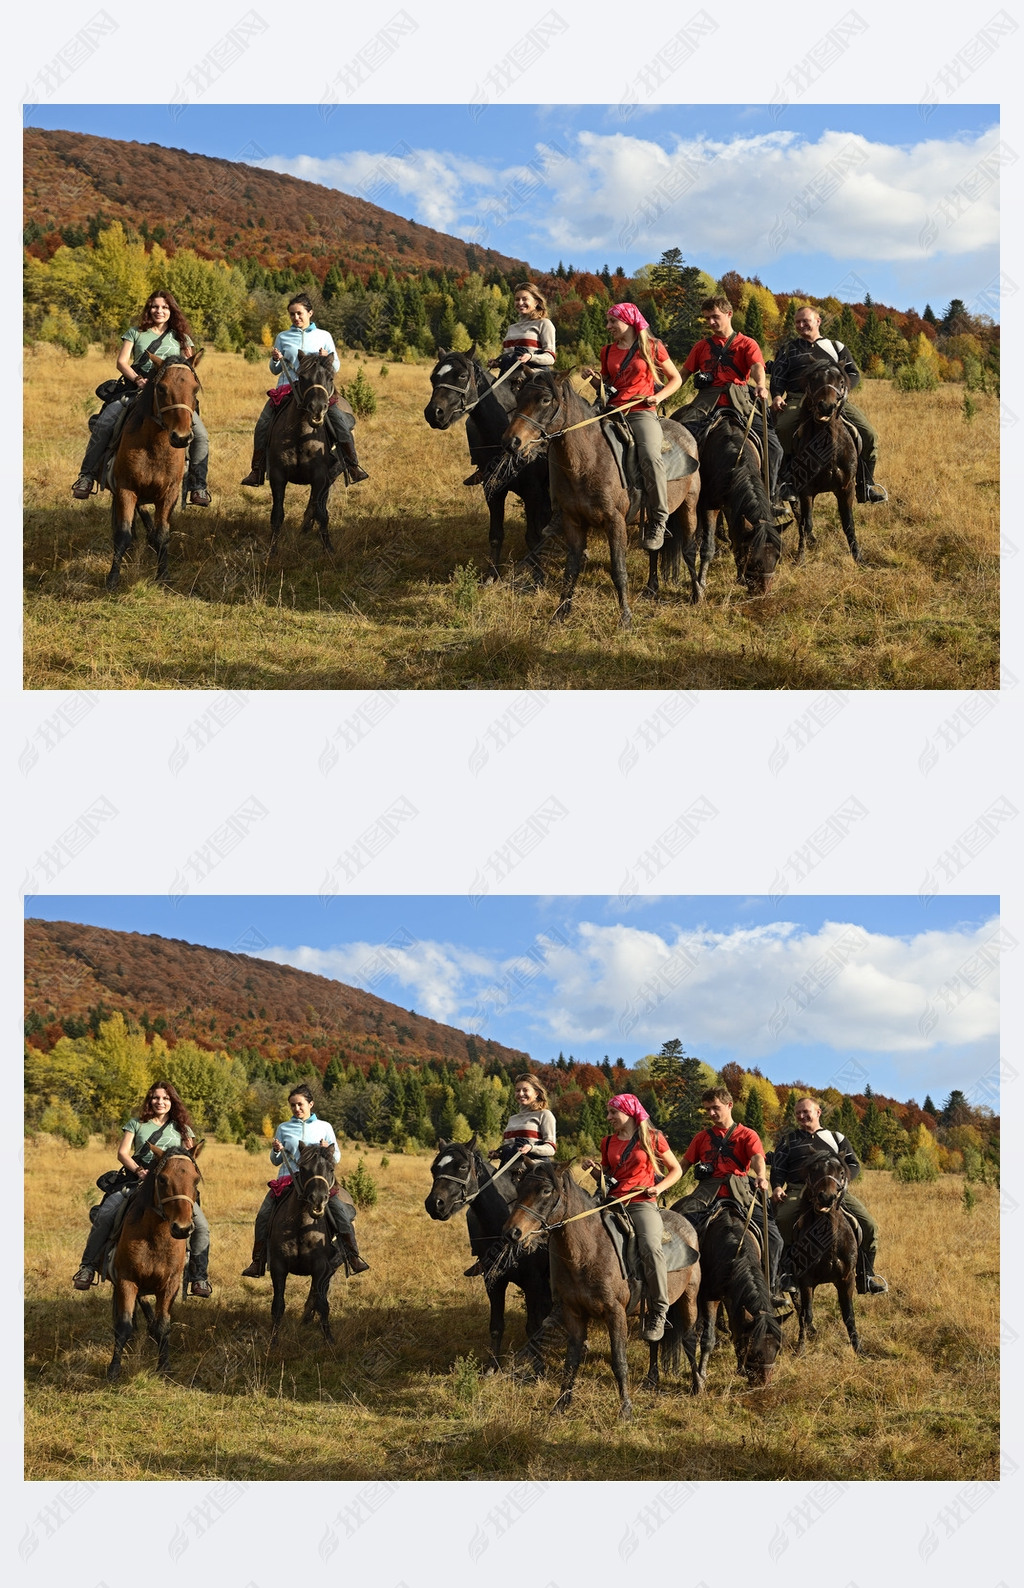 Equestrian touri in the Carpathians